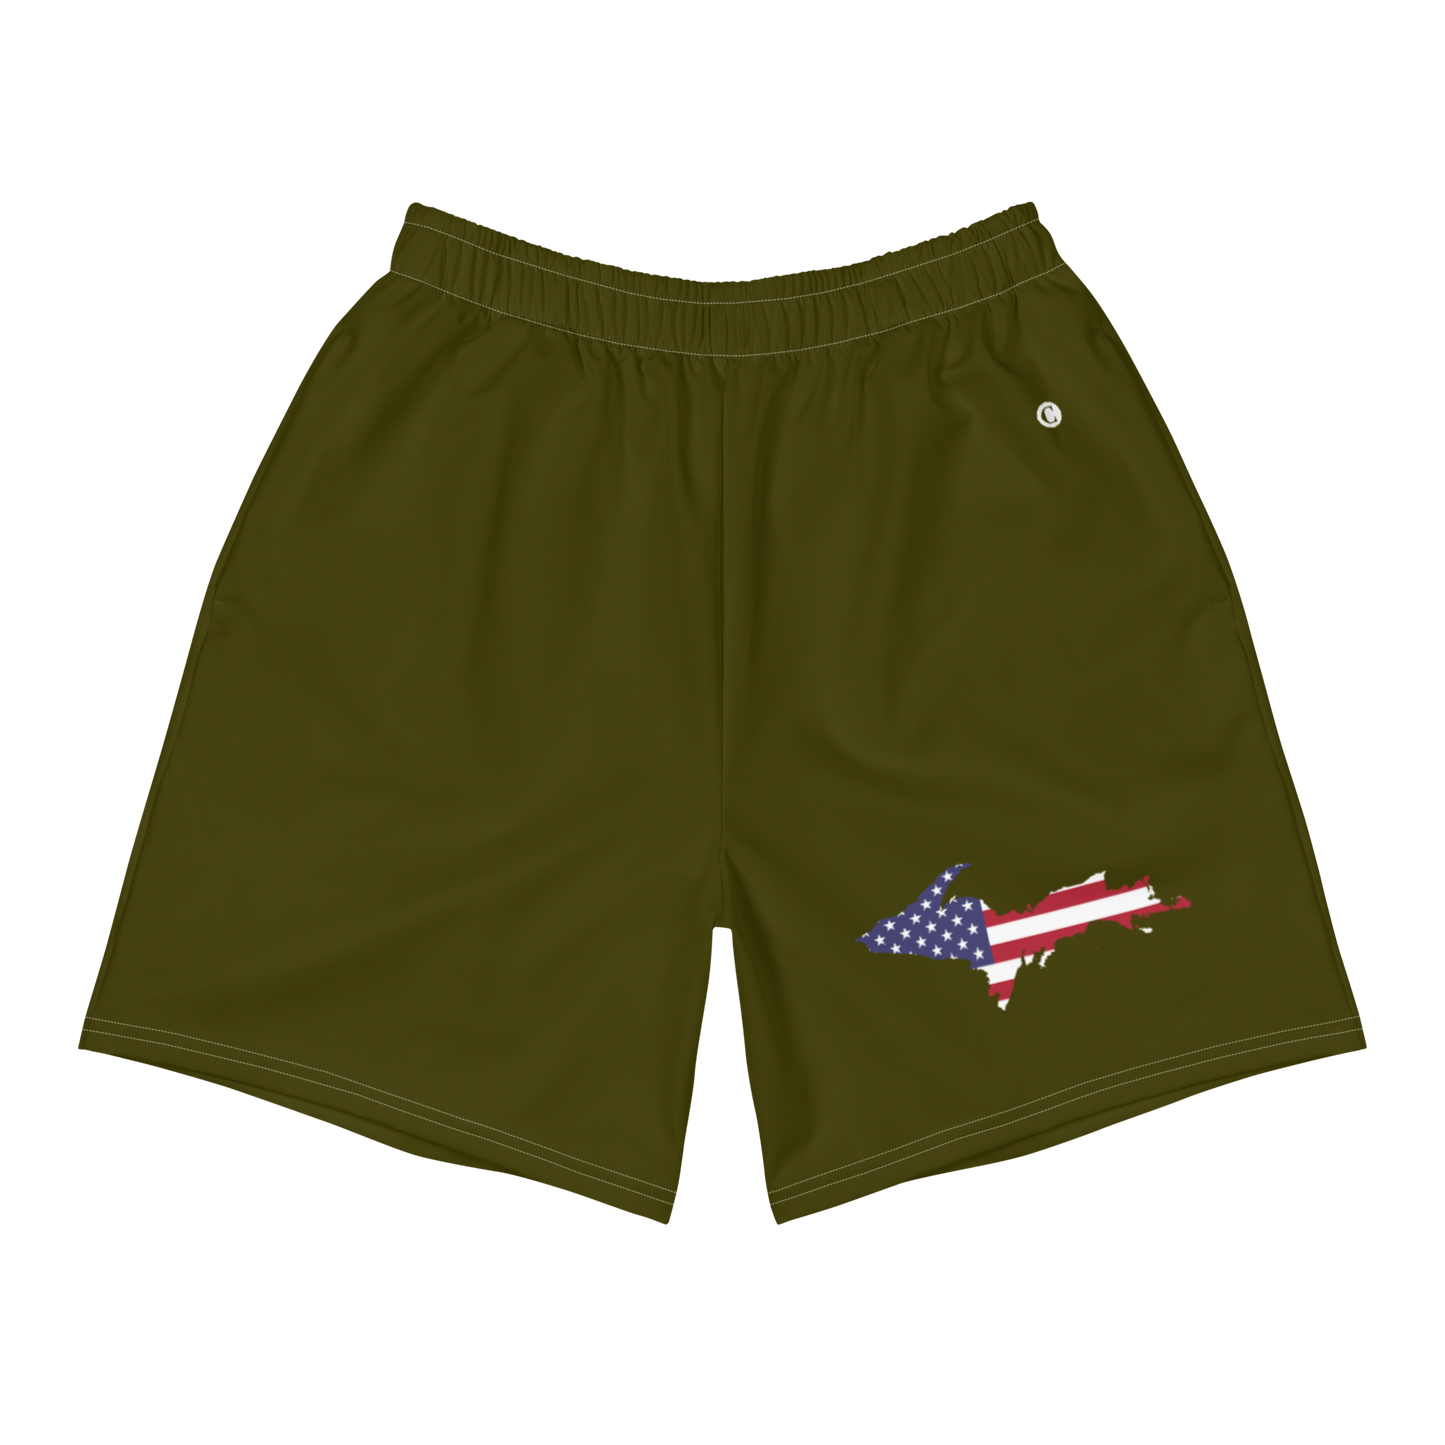 Michigan Upper Peninsula Athletic Shorts (w/ UP USA Flag) | Men's - Military Green